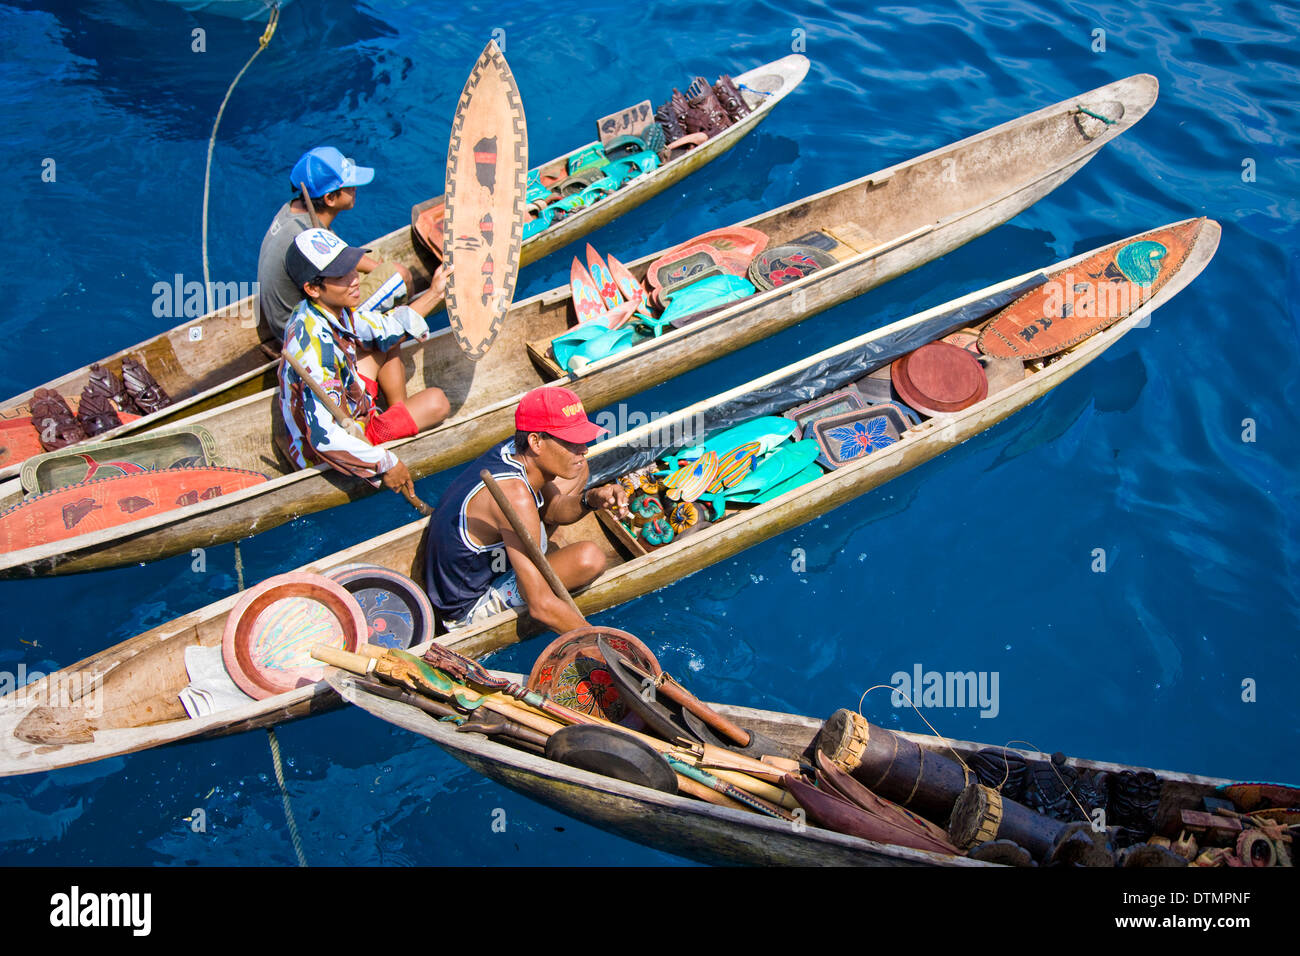 international canoes boating third world country fishing indonesia Stock Photo